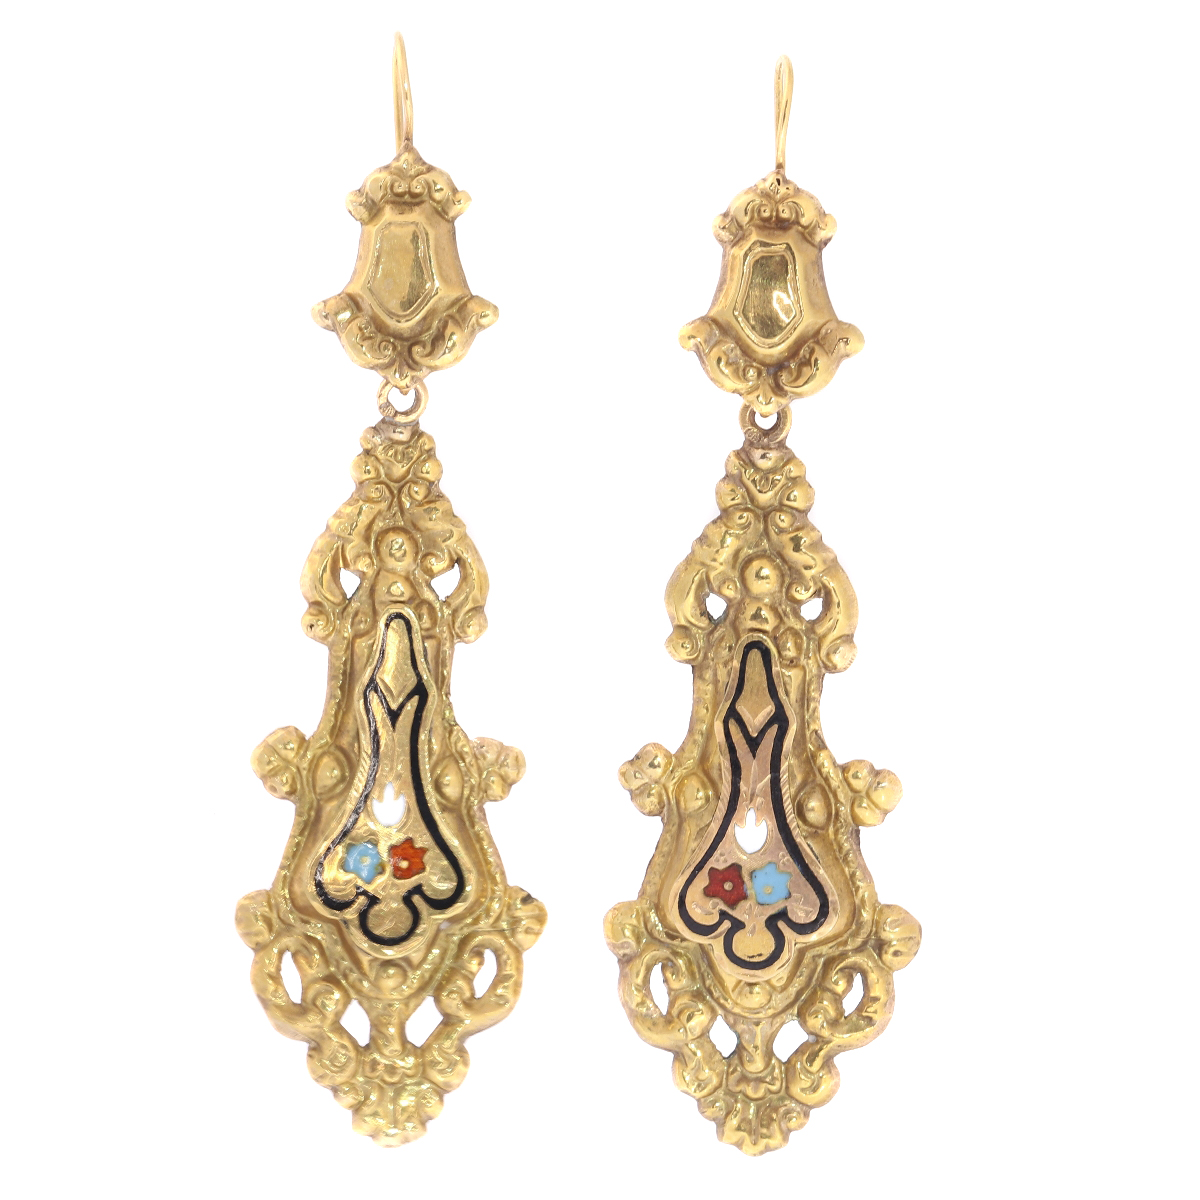 Georgian or Early Victorian long pendant earrings with enamel made in Belgium